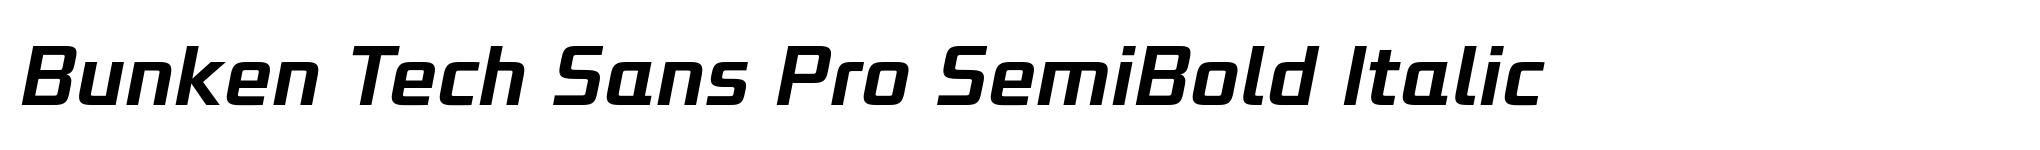 Bunken Tech Sans Pro SemiBold Italic image